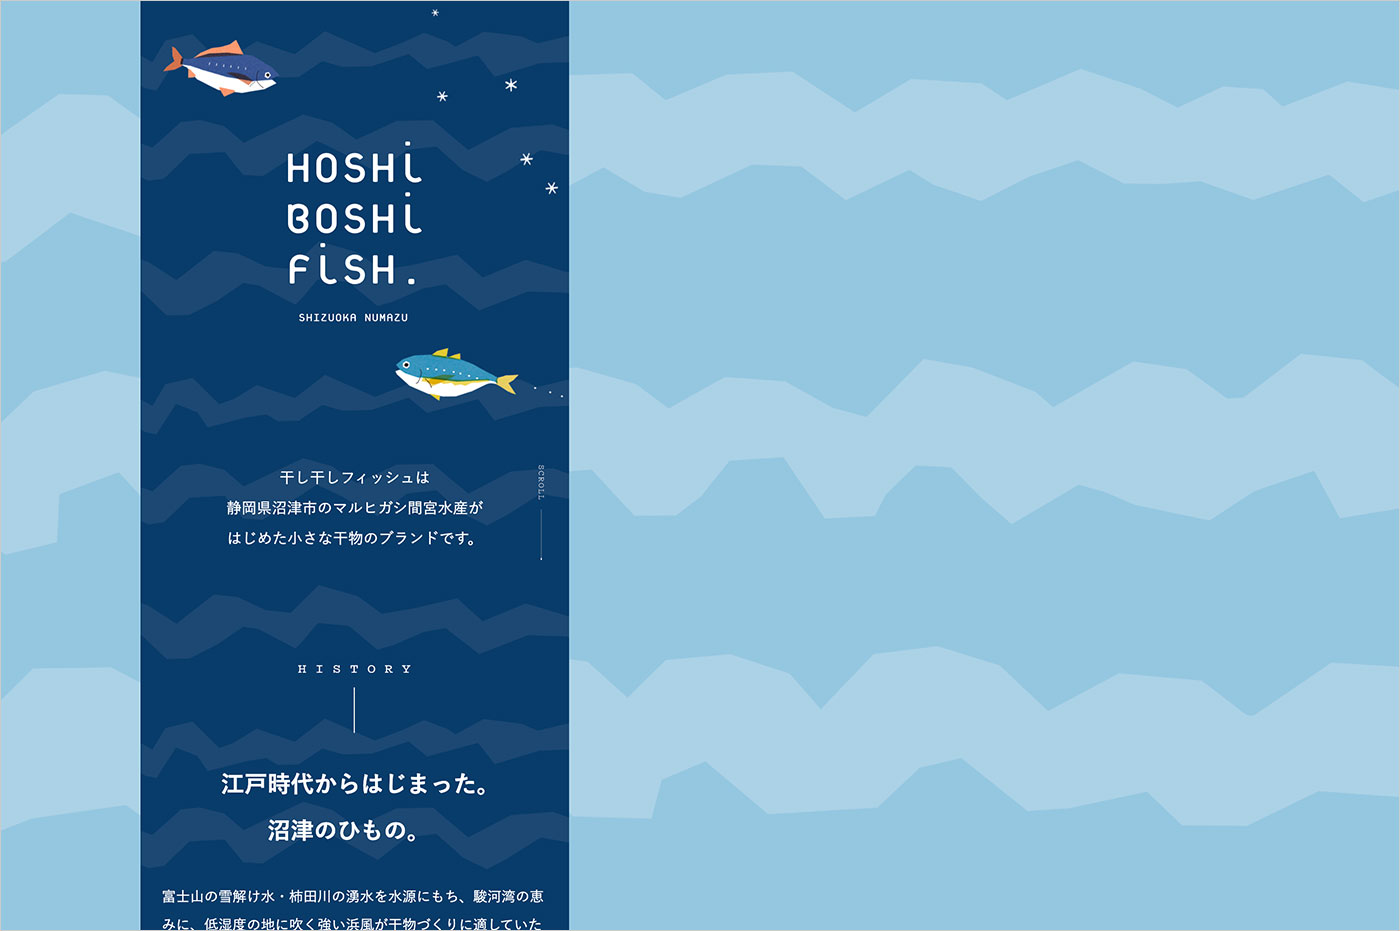 HOSHI BOSHI FISH （干し干しフィッシュ） – 沼津の干物ウェブサイトの画面キャプチャ画像